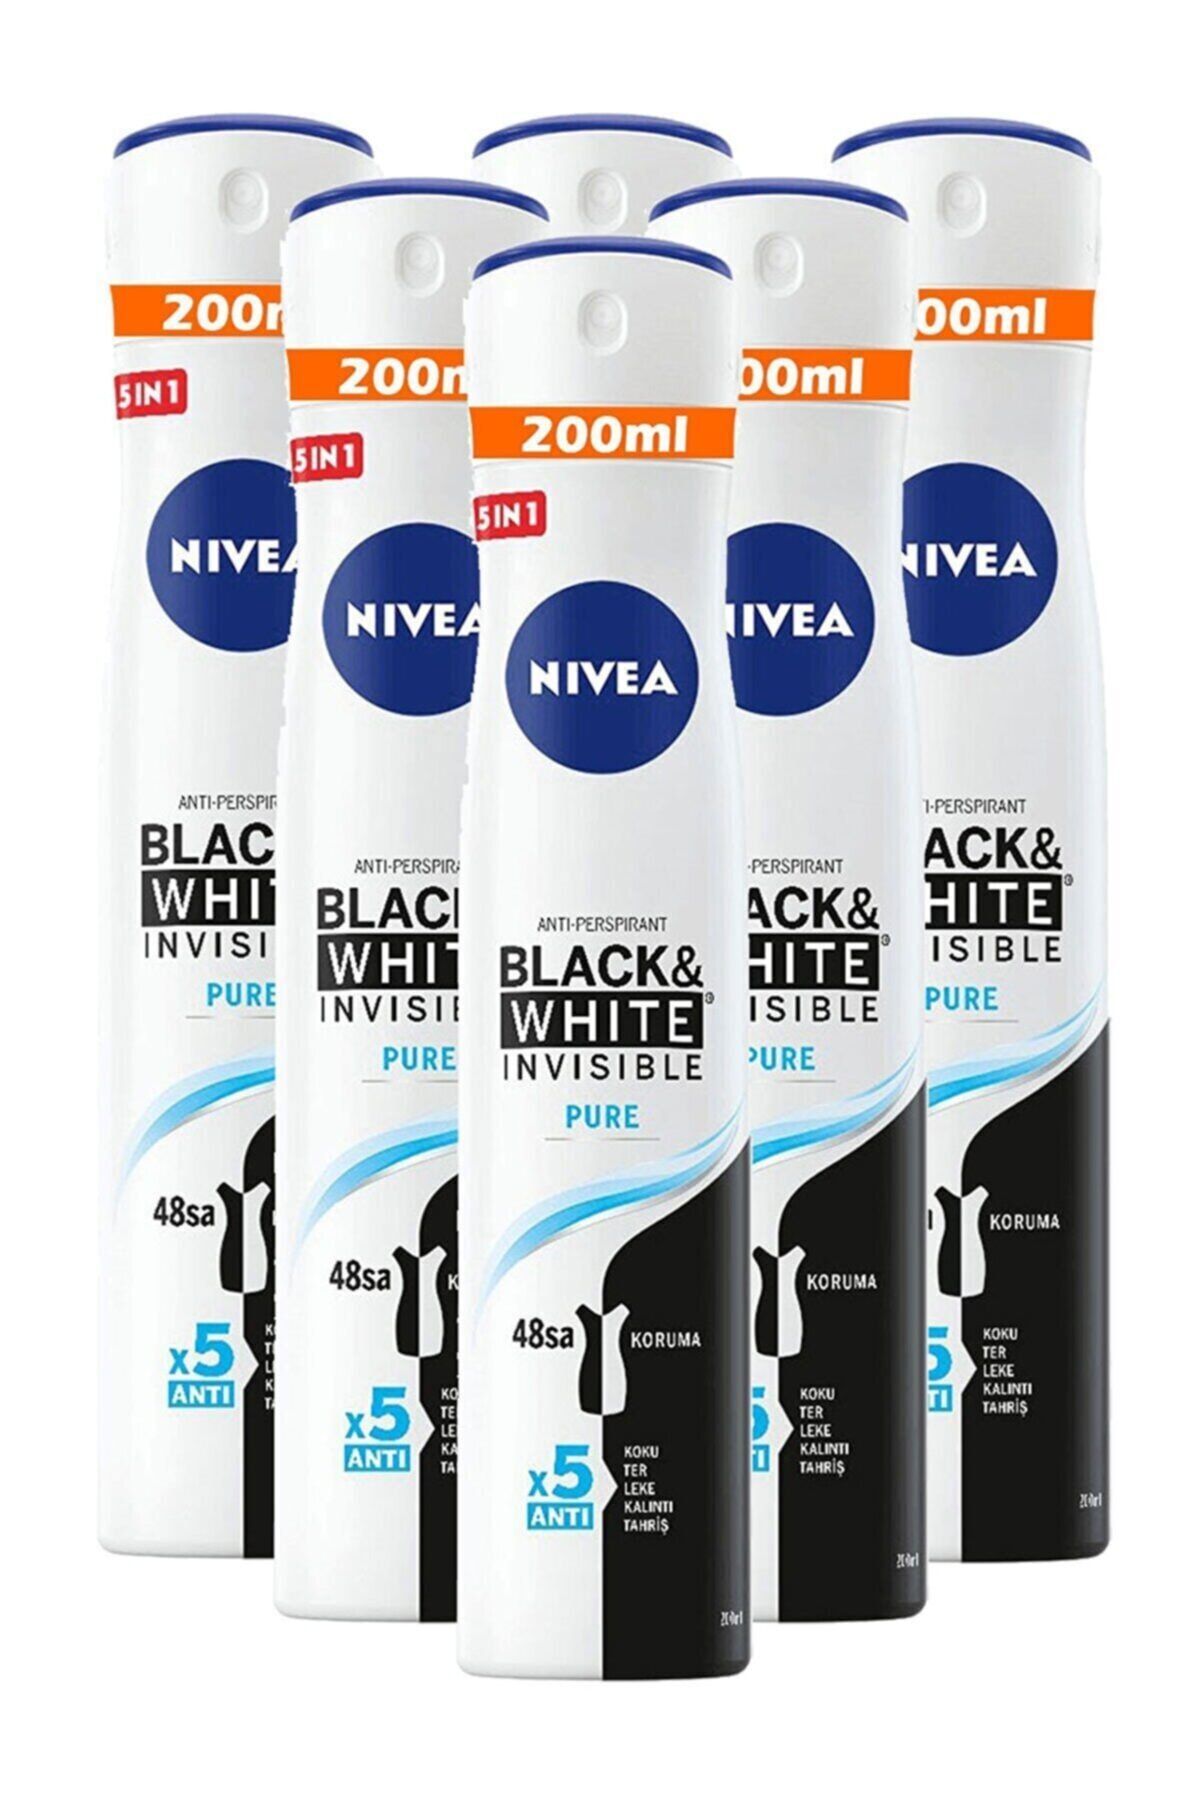 NIVEA Kadın Black White Invisible Pure Deodorant 200ml 6'lı Paket